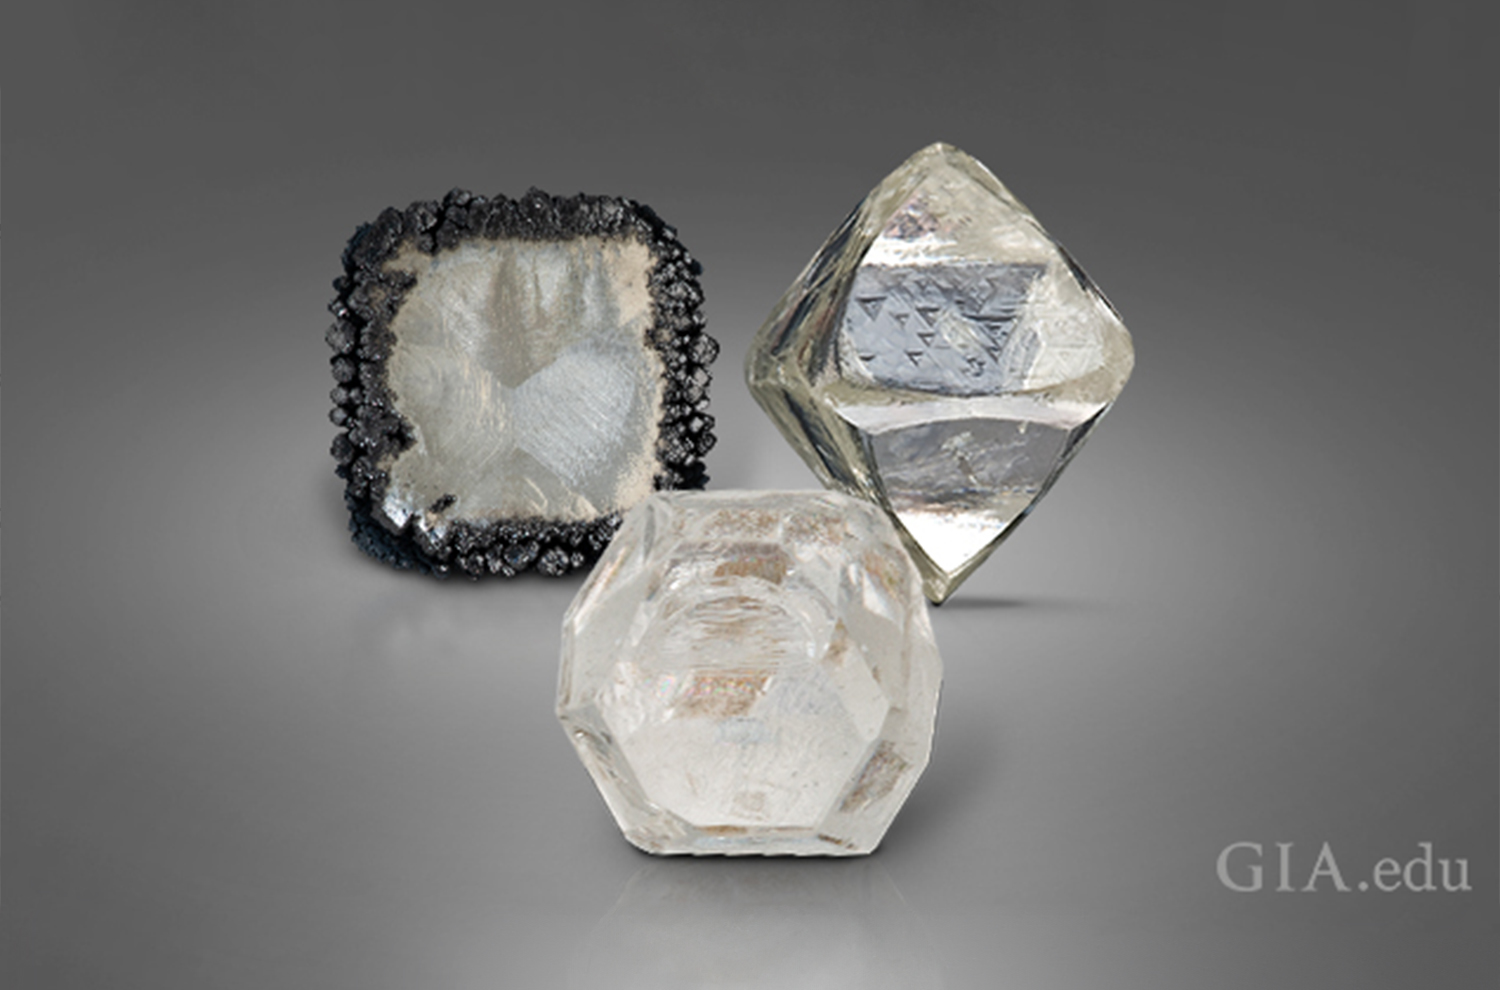 Laboratory-grown CVD rough diamond (left), laboratory-grown HPHT rough diamond (middle) and natural rough diamond (right). (Image Source: GIA.edu)